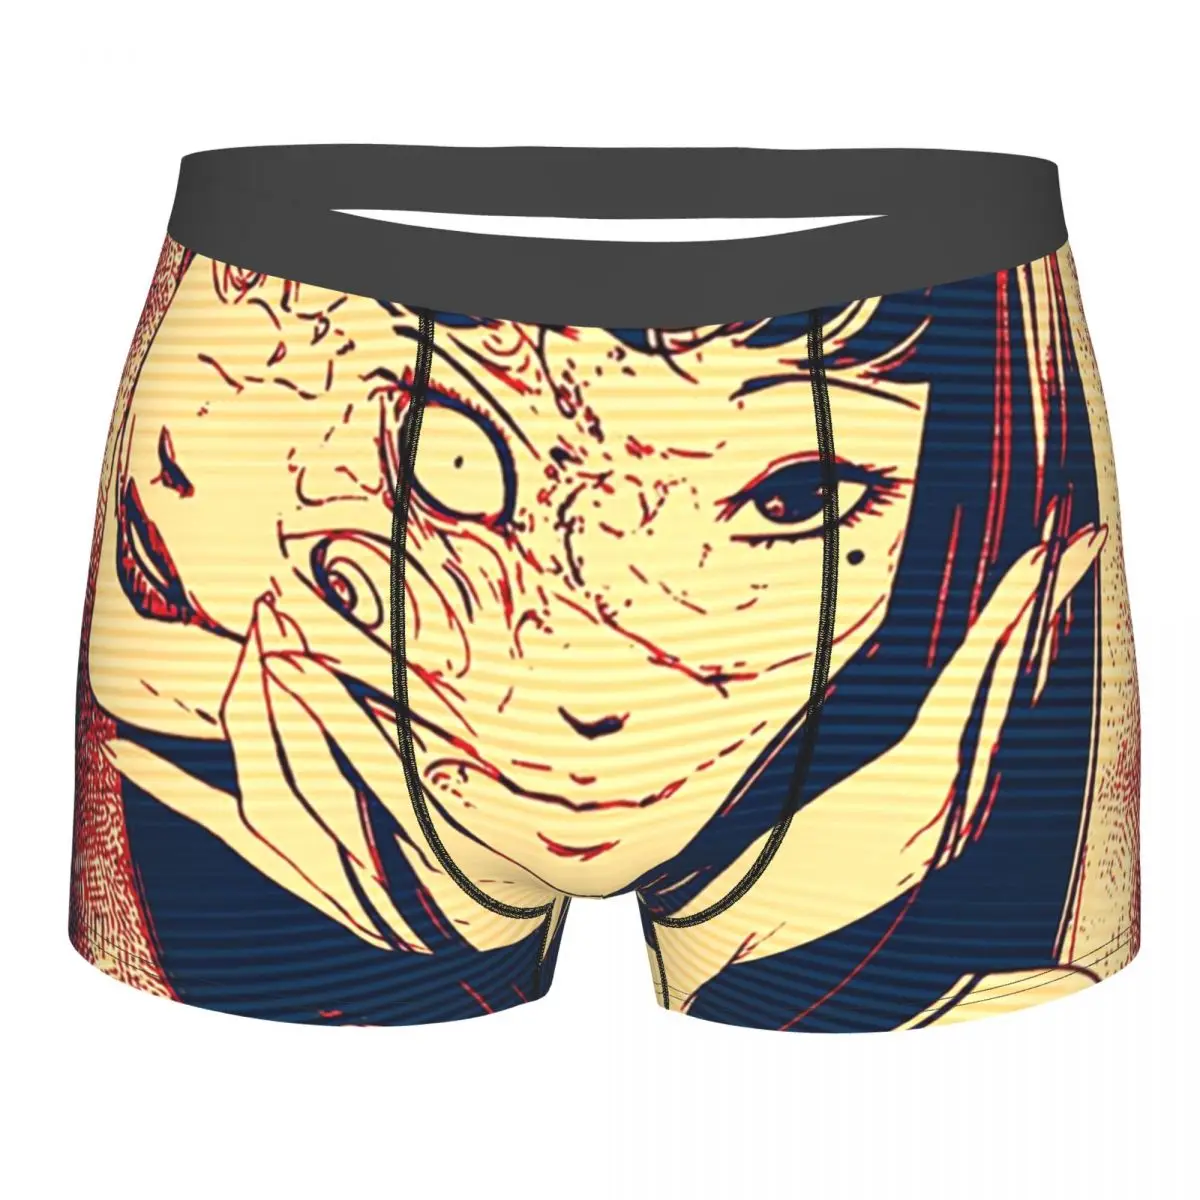 

Vintage Art Japanese Horror Manga Tomie Ito Junji Underpants Breathbale Panties Male Underwear Print Shorts Boxer Briefs